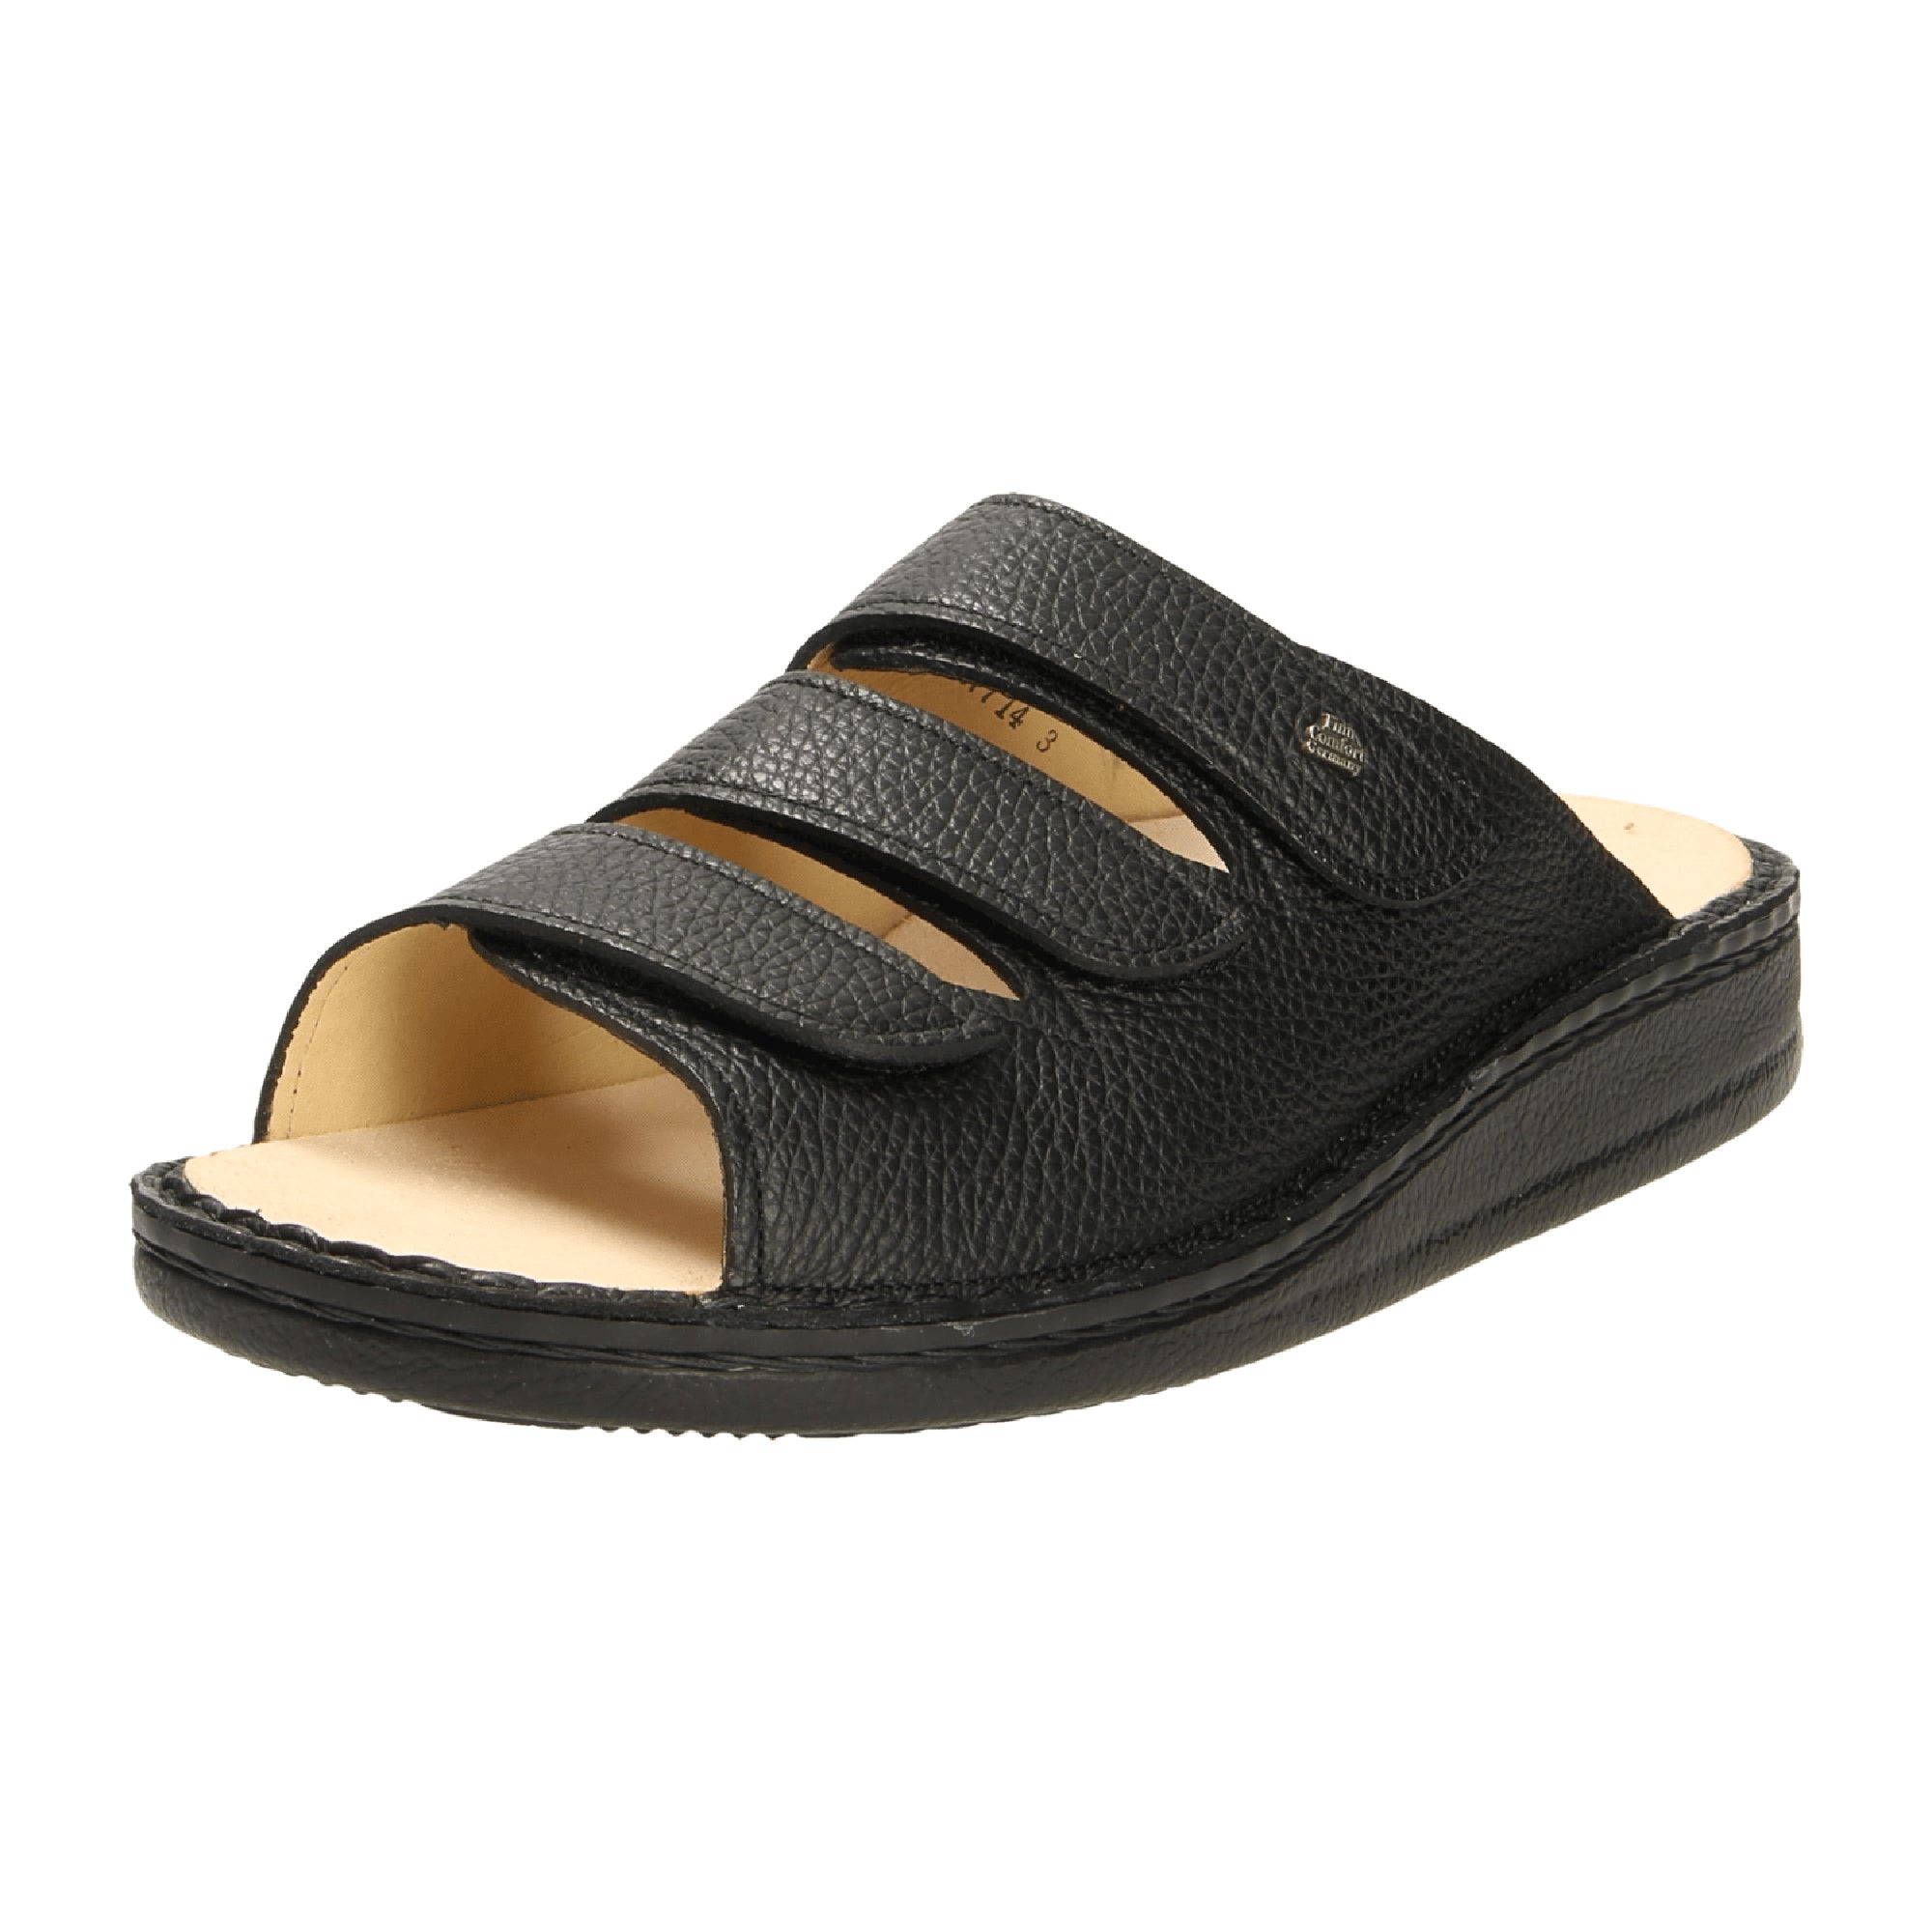 Finn Comfort Men's Comfortable Orthopedic Black Leather Shoes 1508-055099